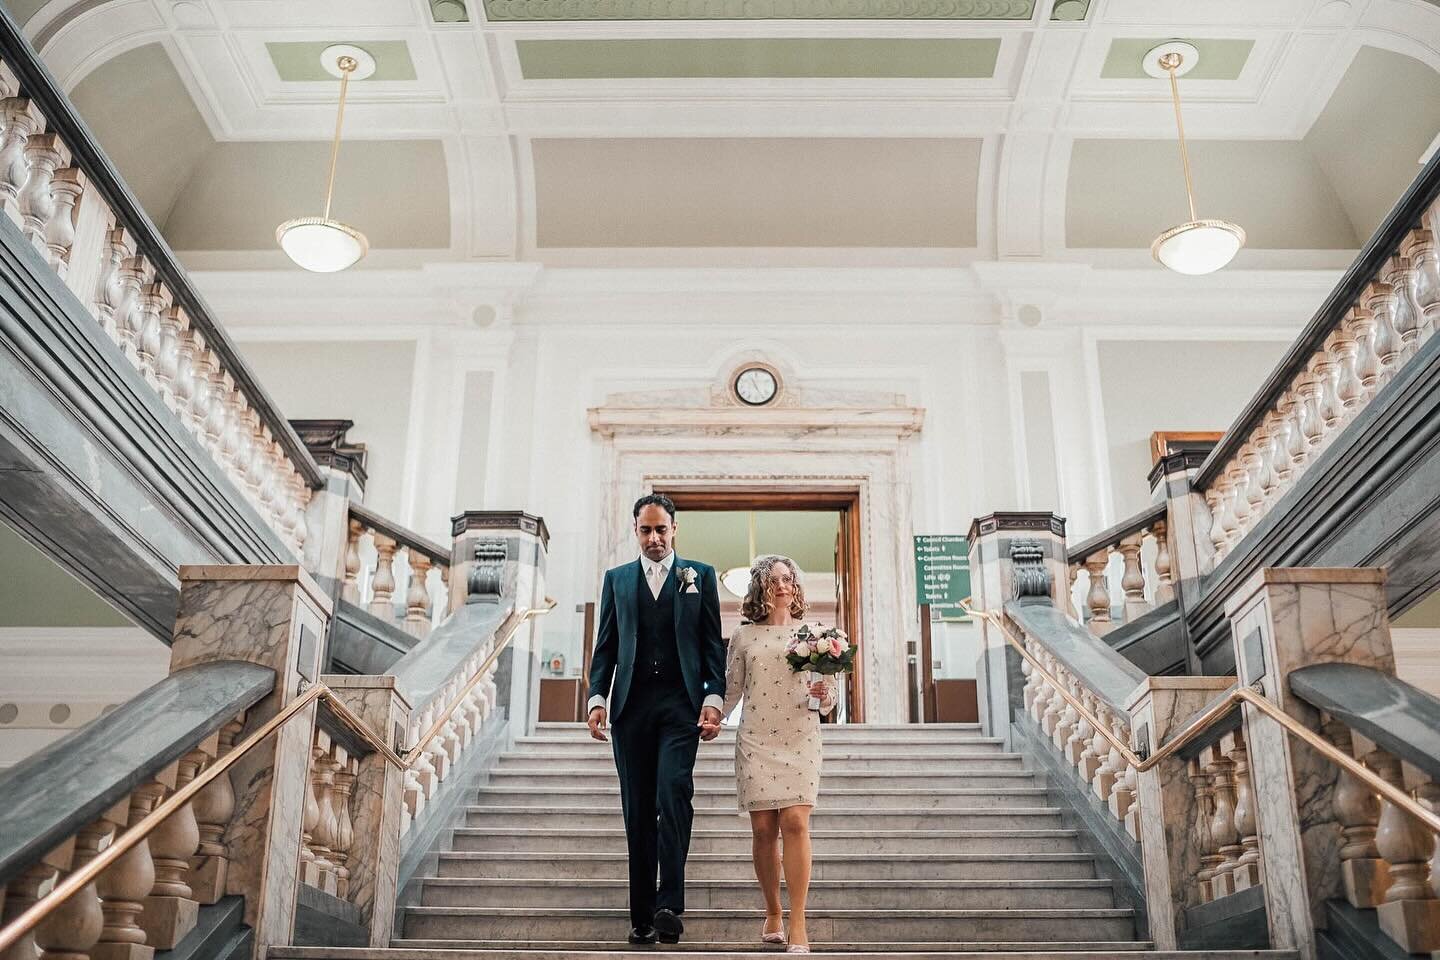 Kunal + Jess at @sayidoislington on their wedding day.
.
.
.
.
.
#islington #islington_london #islingtontownhall #islingtontownhallwedding #islingtontownhallweddingphotographer #londonwedding #londonweddingphotographer #londonweddingphotography #suss